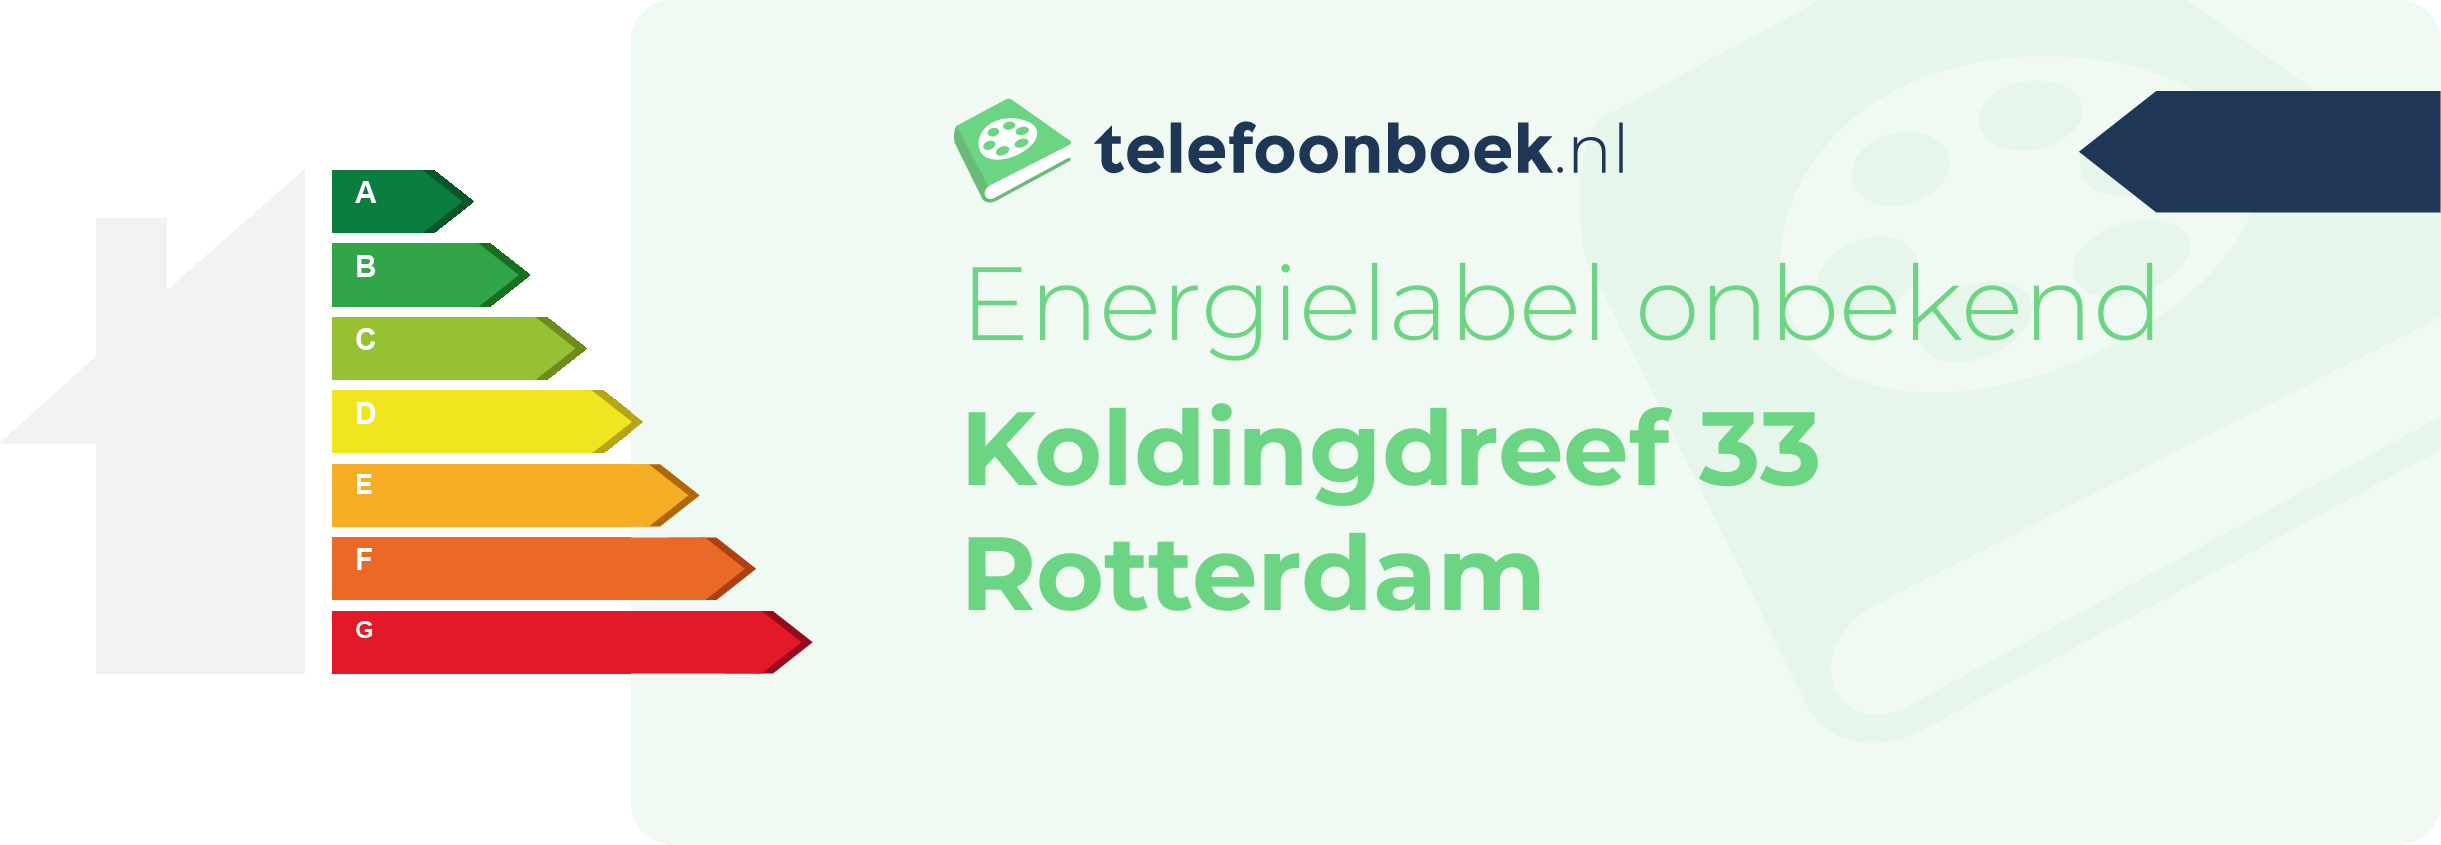 Energielabel Koldingdreef 33 Rotterdam